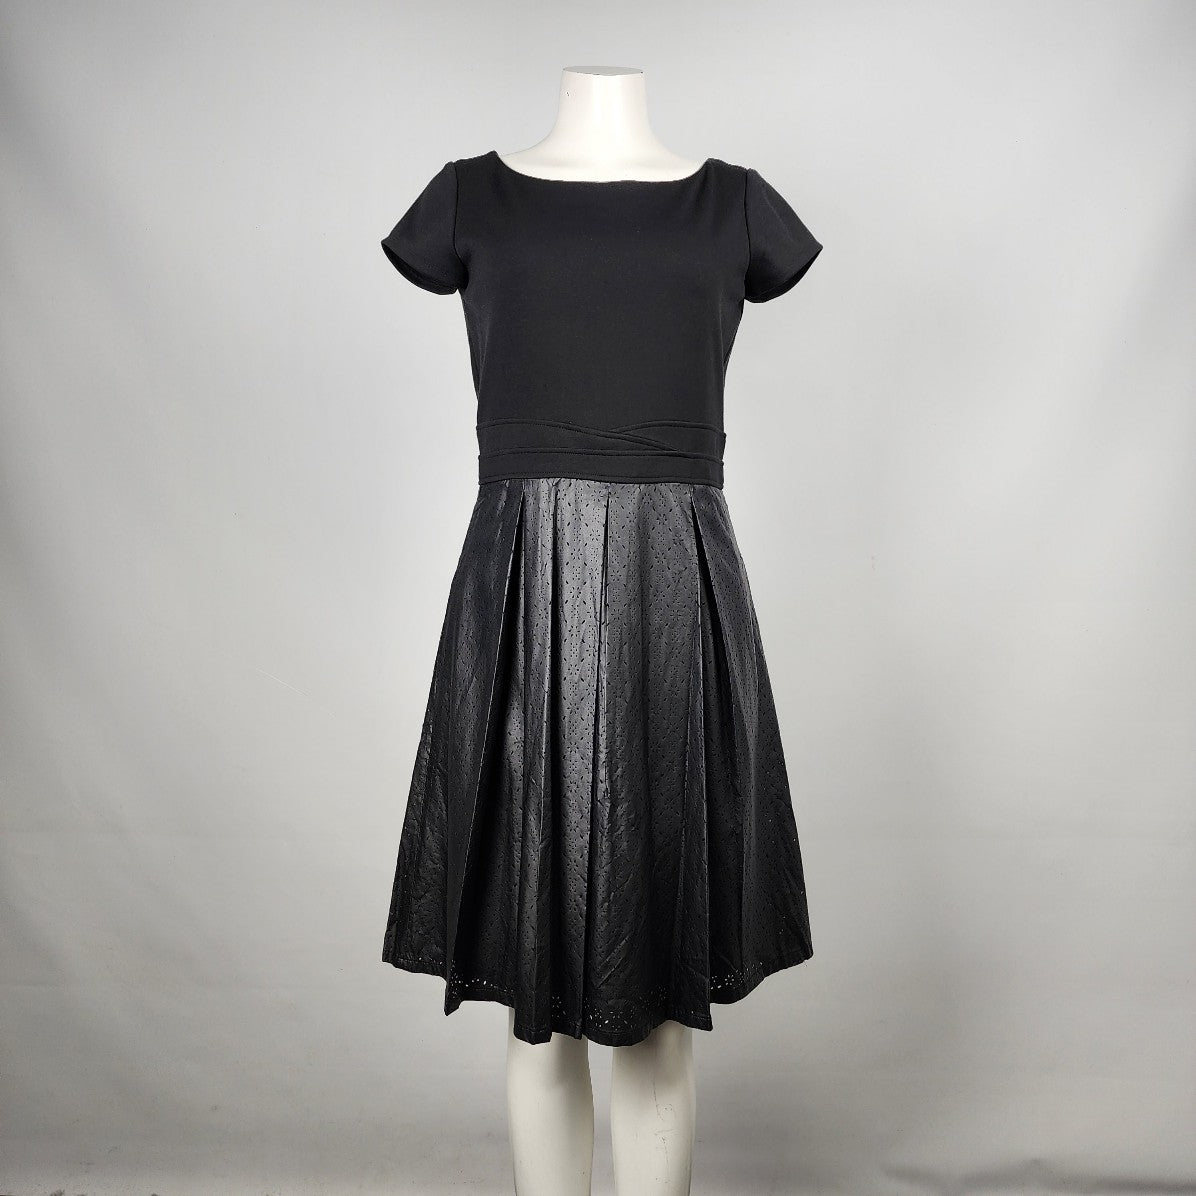 Ellen Tracy Black Faux Leather Laser Cut Skirt Fit & Flare Dress Size 8